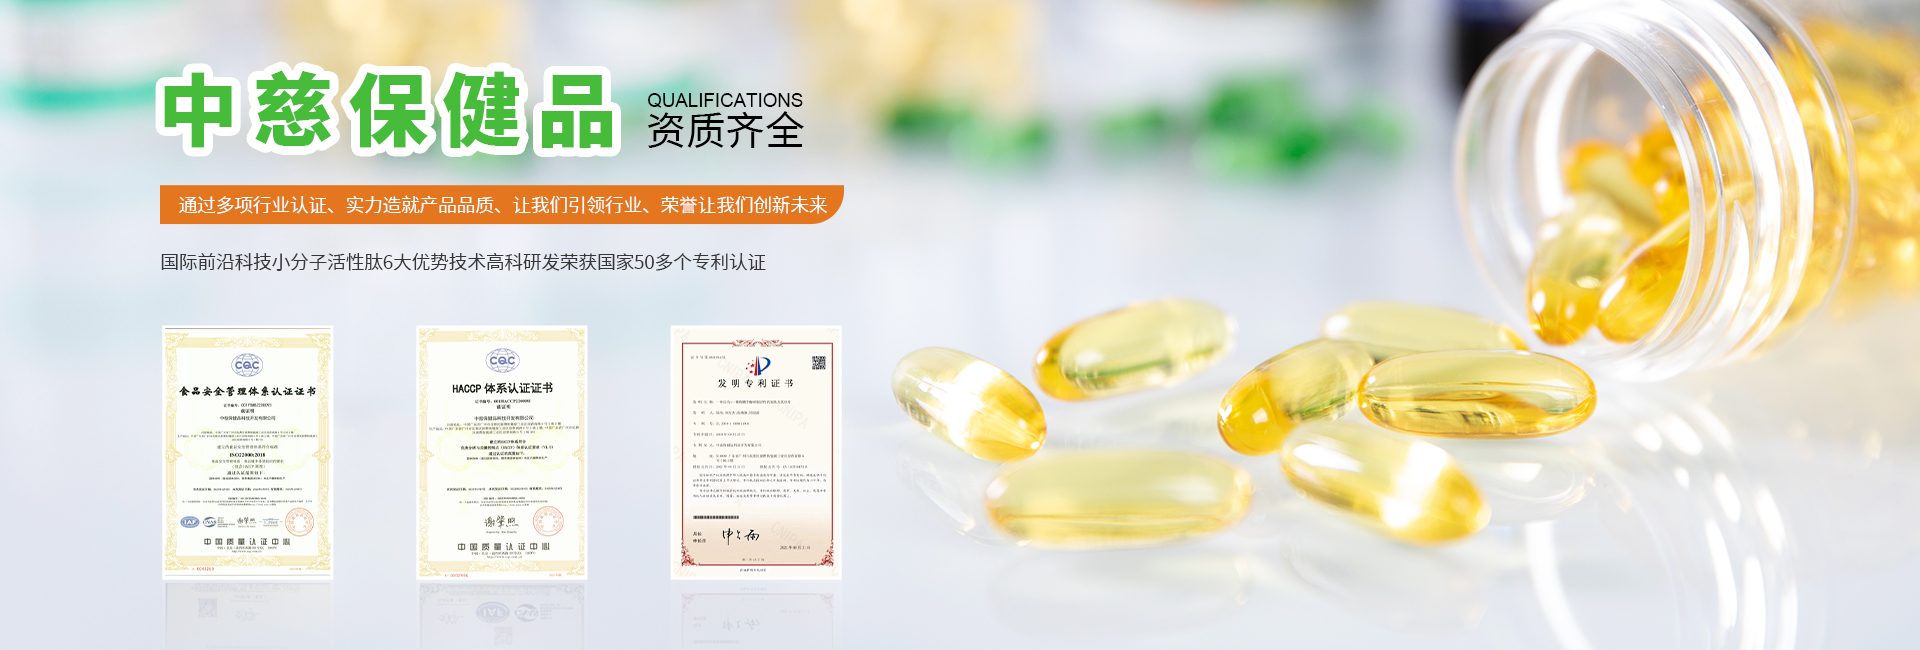 Zhongci Health Products Technology Development Co., Ltd.